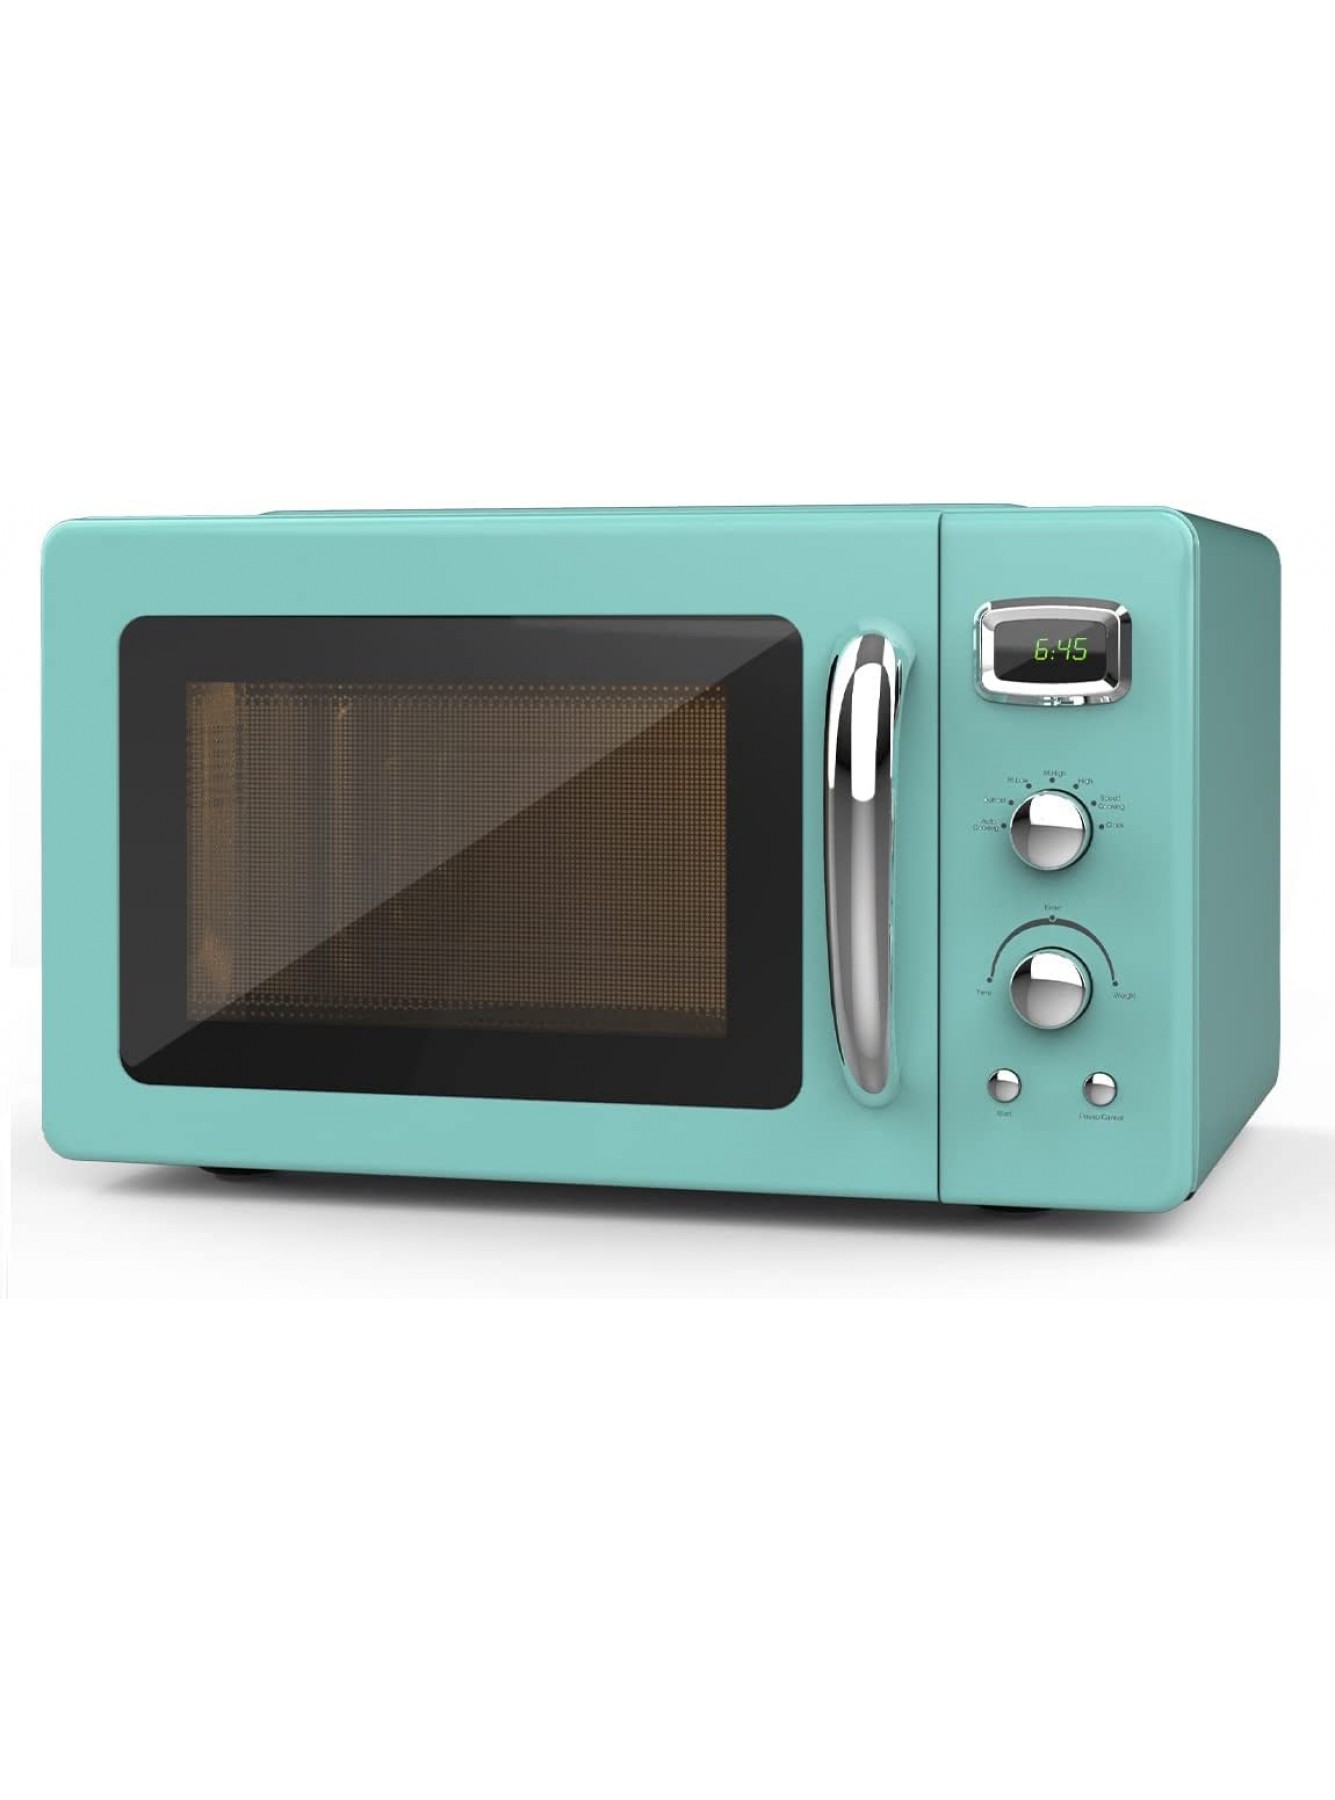 Retro Microwave Oven SIMOE Compact Countertop Microwave 0.9 cu.ft. 900 W B09F2TKZMX